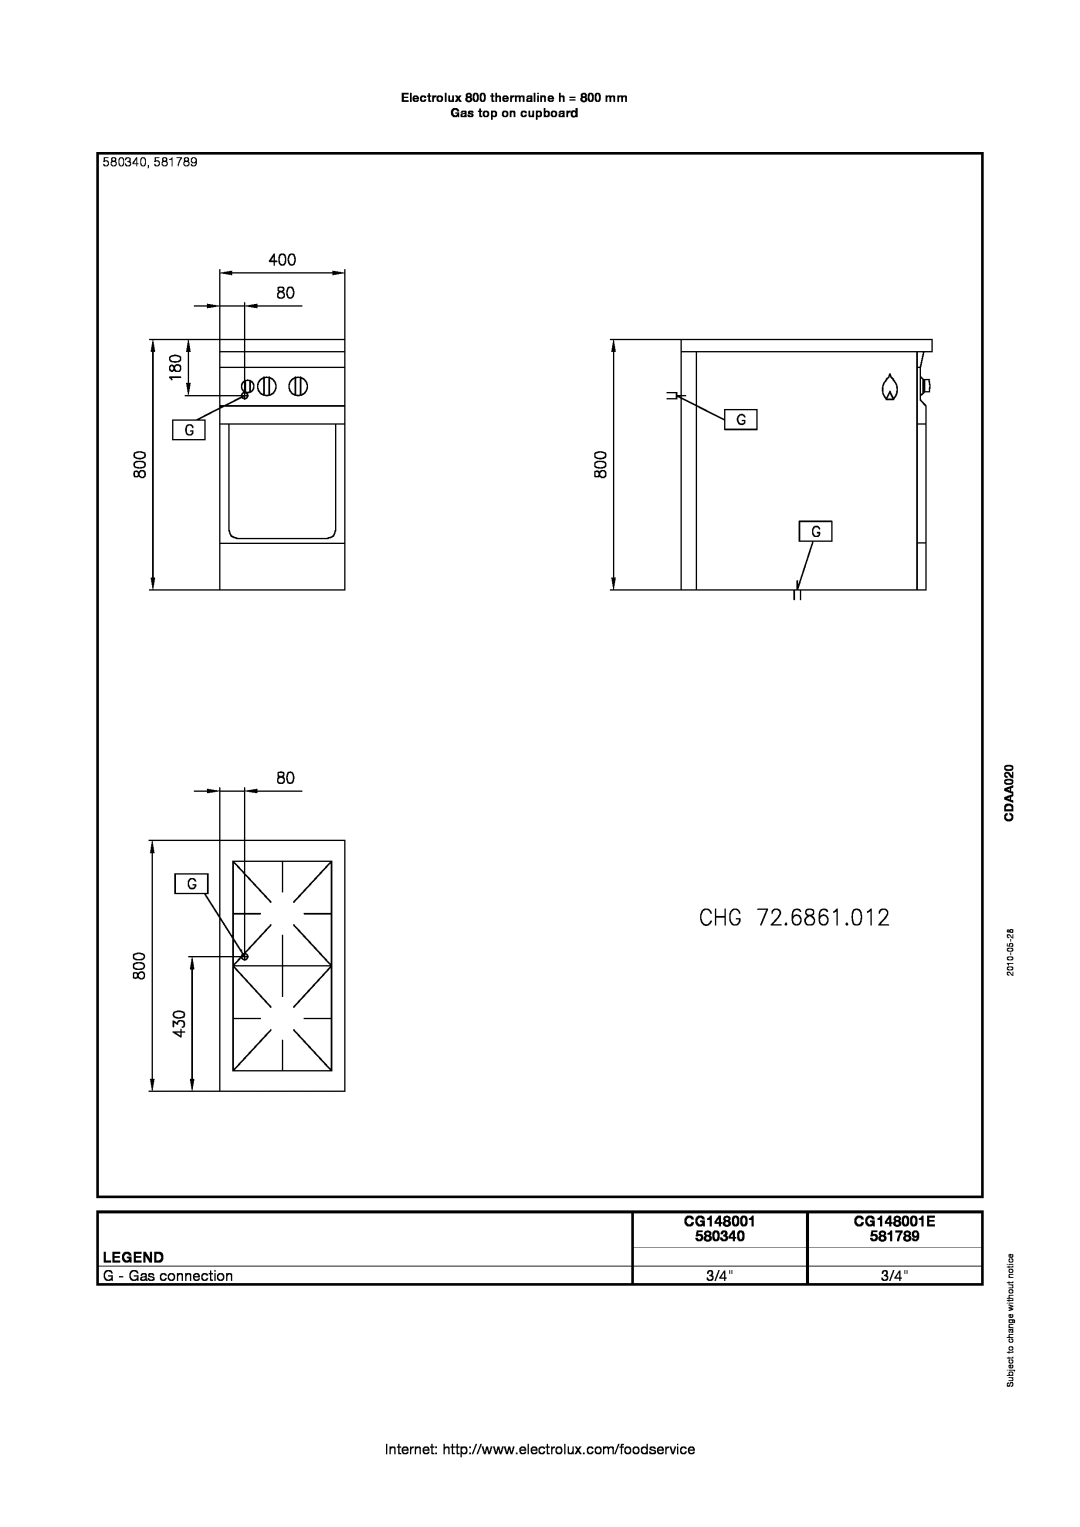 Electrolux manual 580340, Electrolux 800 thermaline h = 800 mm Gas top on cupboard, CDAA020, 2010-05-28 